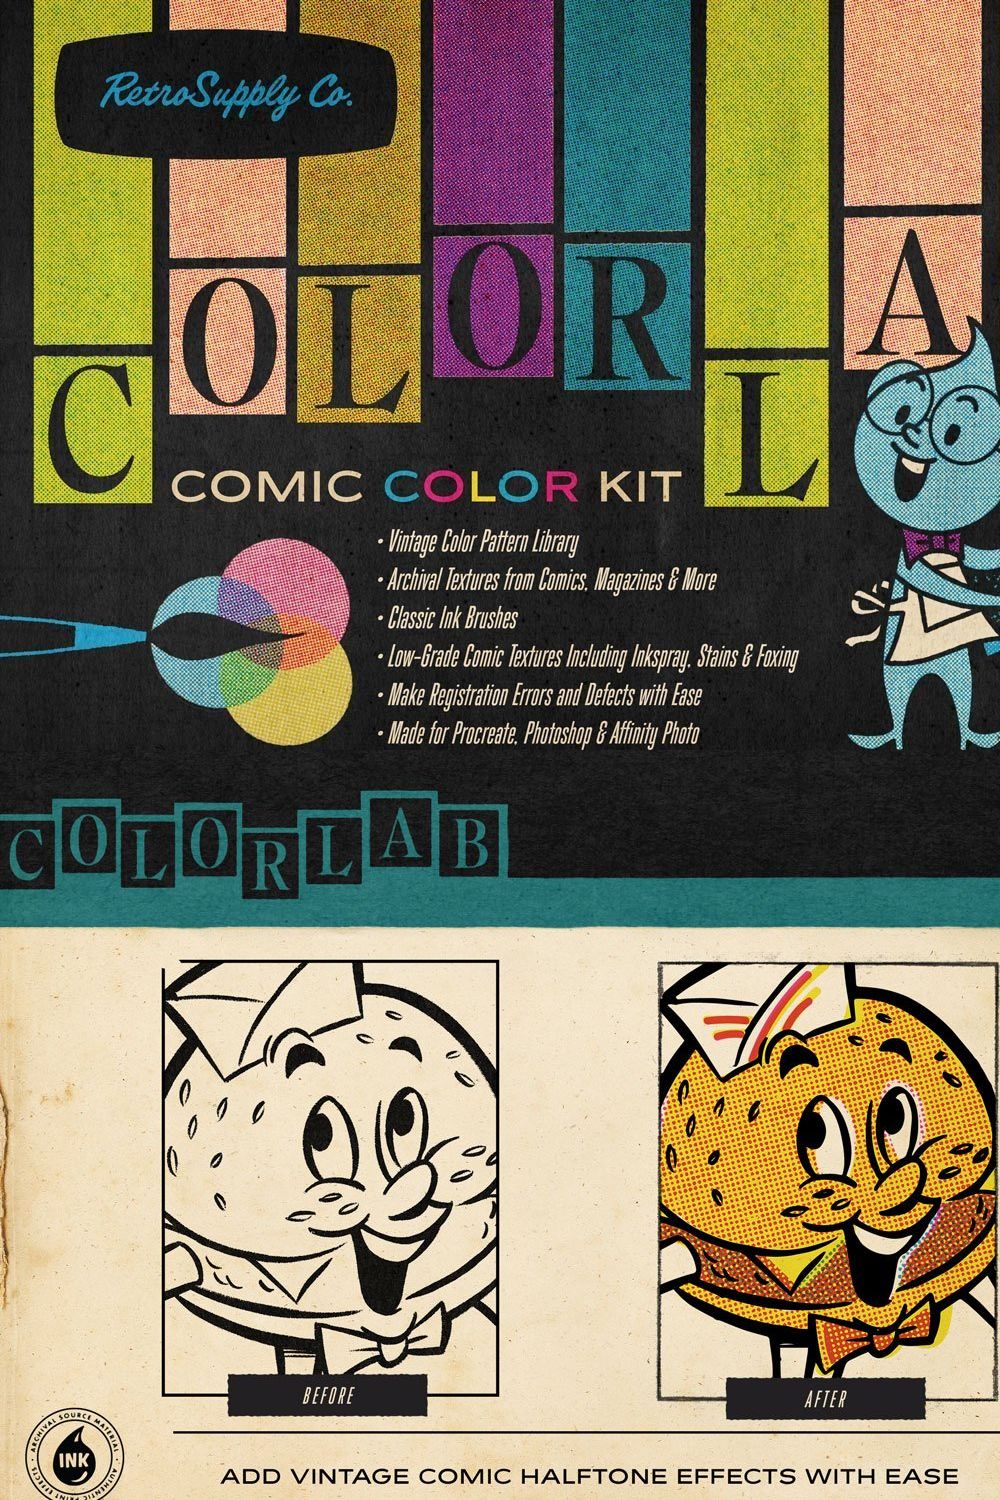 ColorLab Illustrator Vintage Comic pinterest preview image.